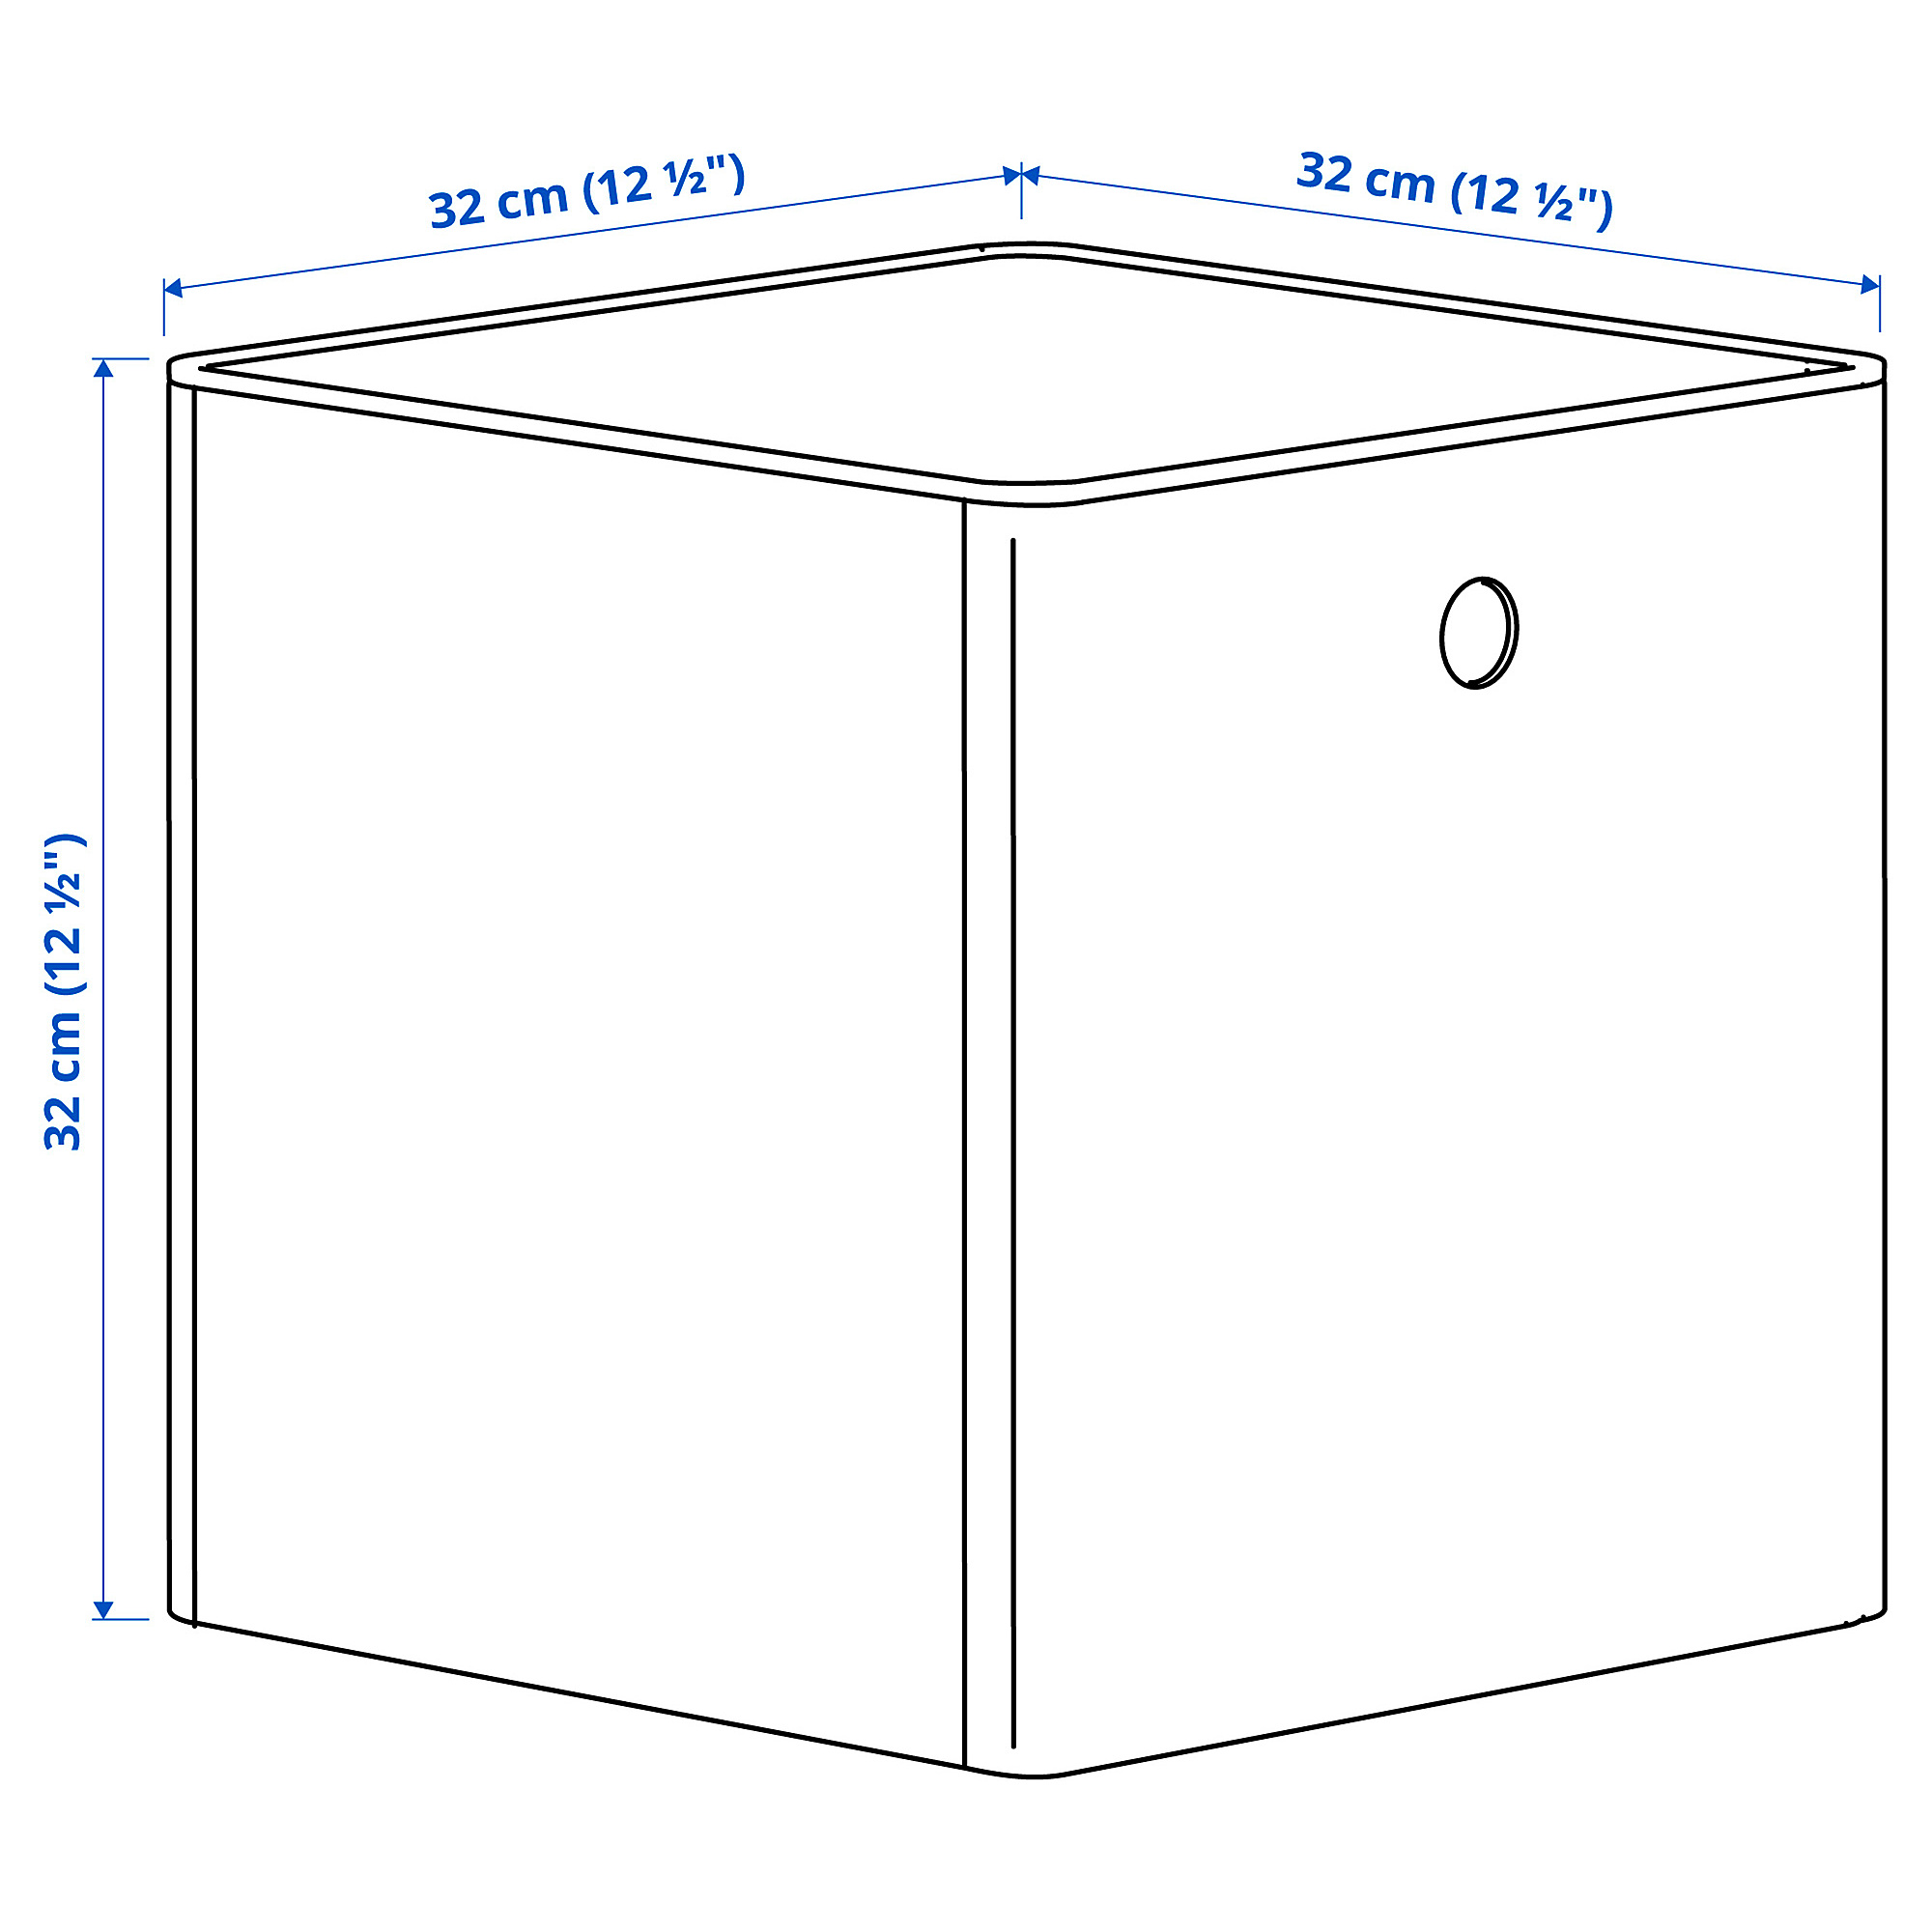 KUGGIS storage box with lid